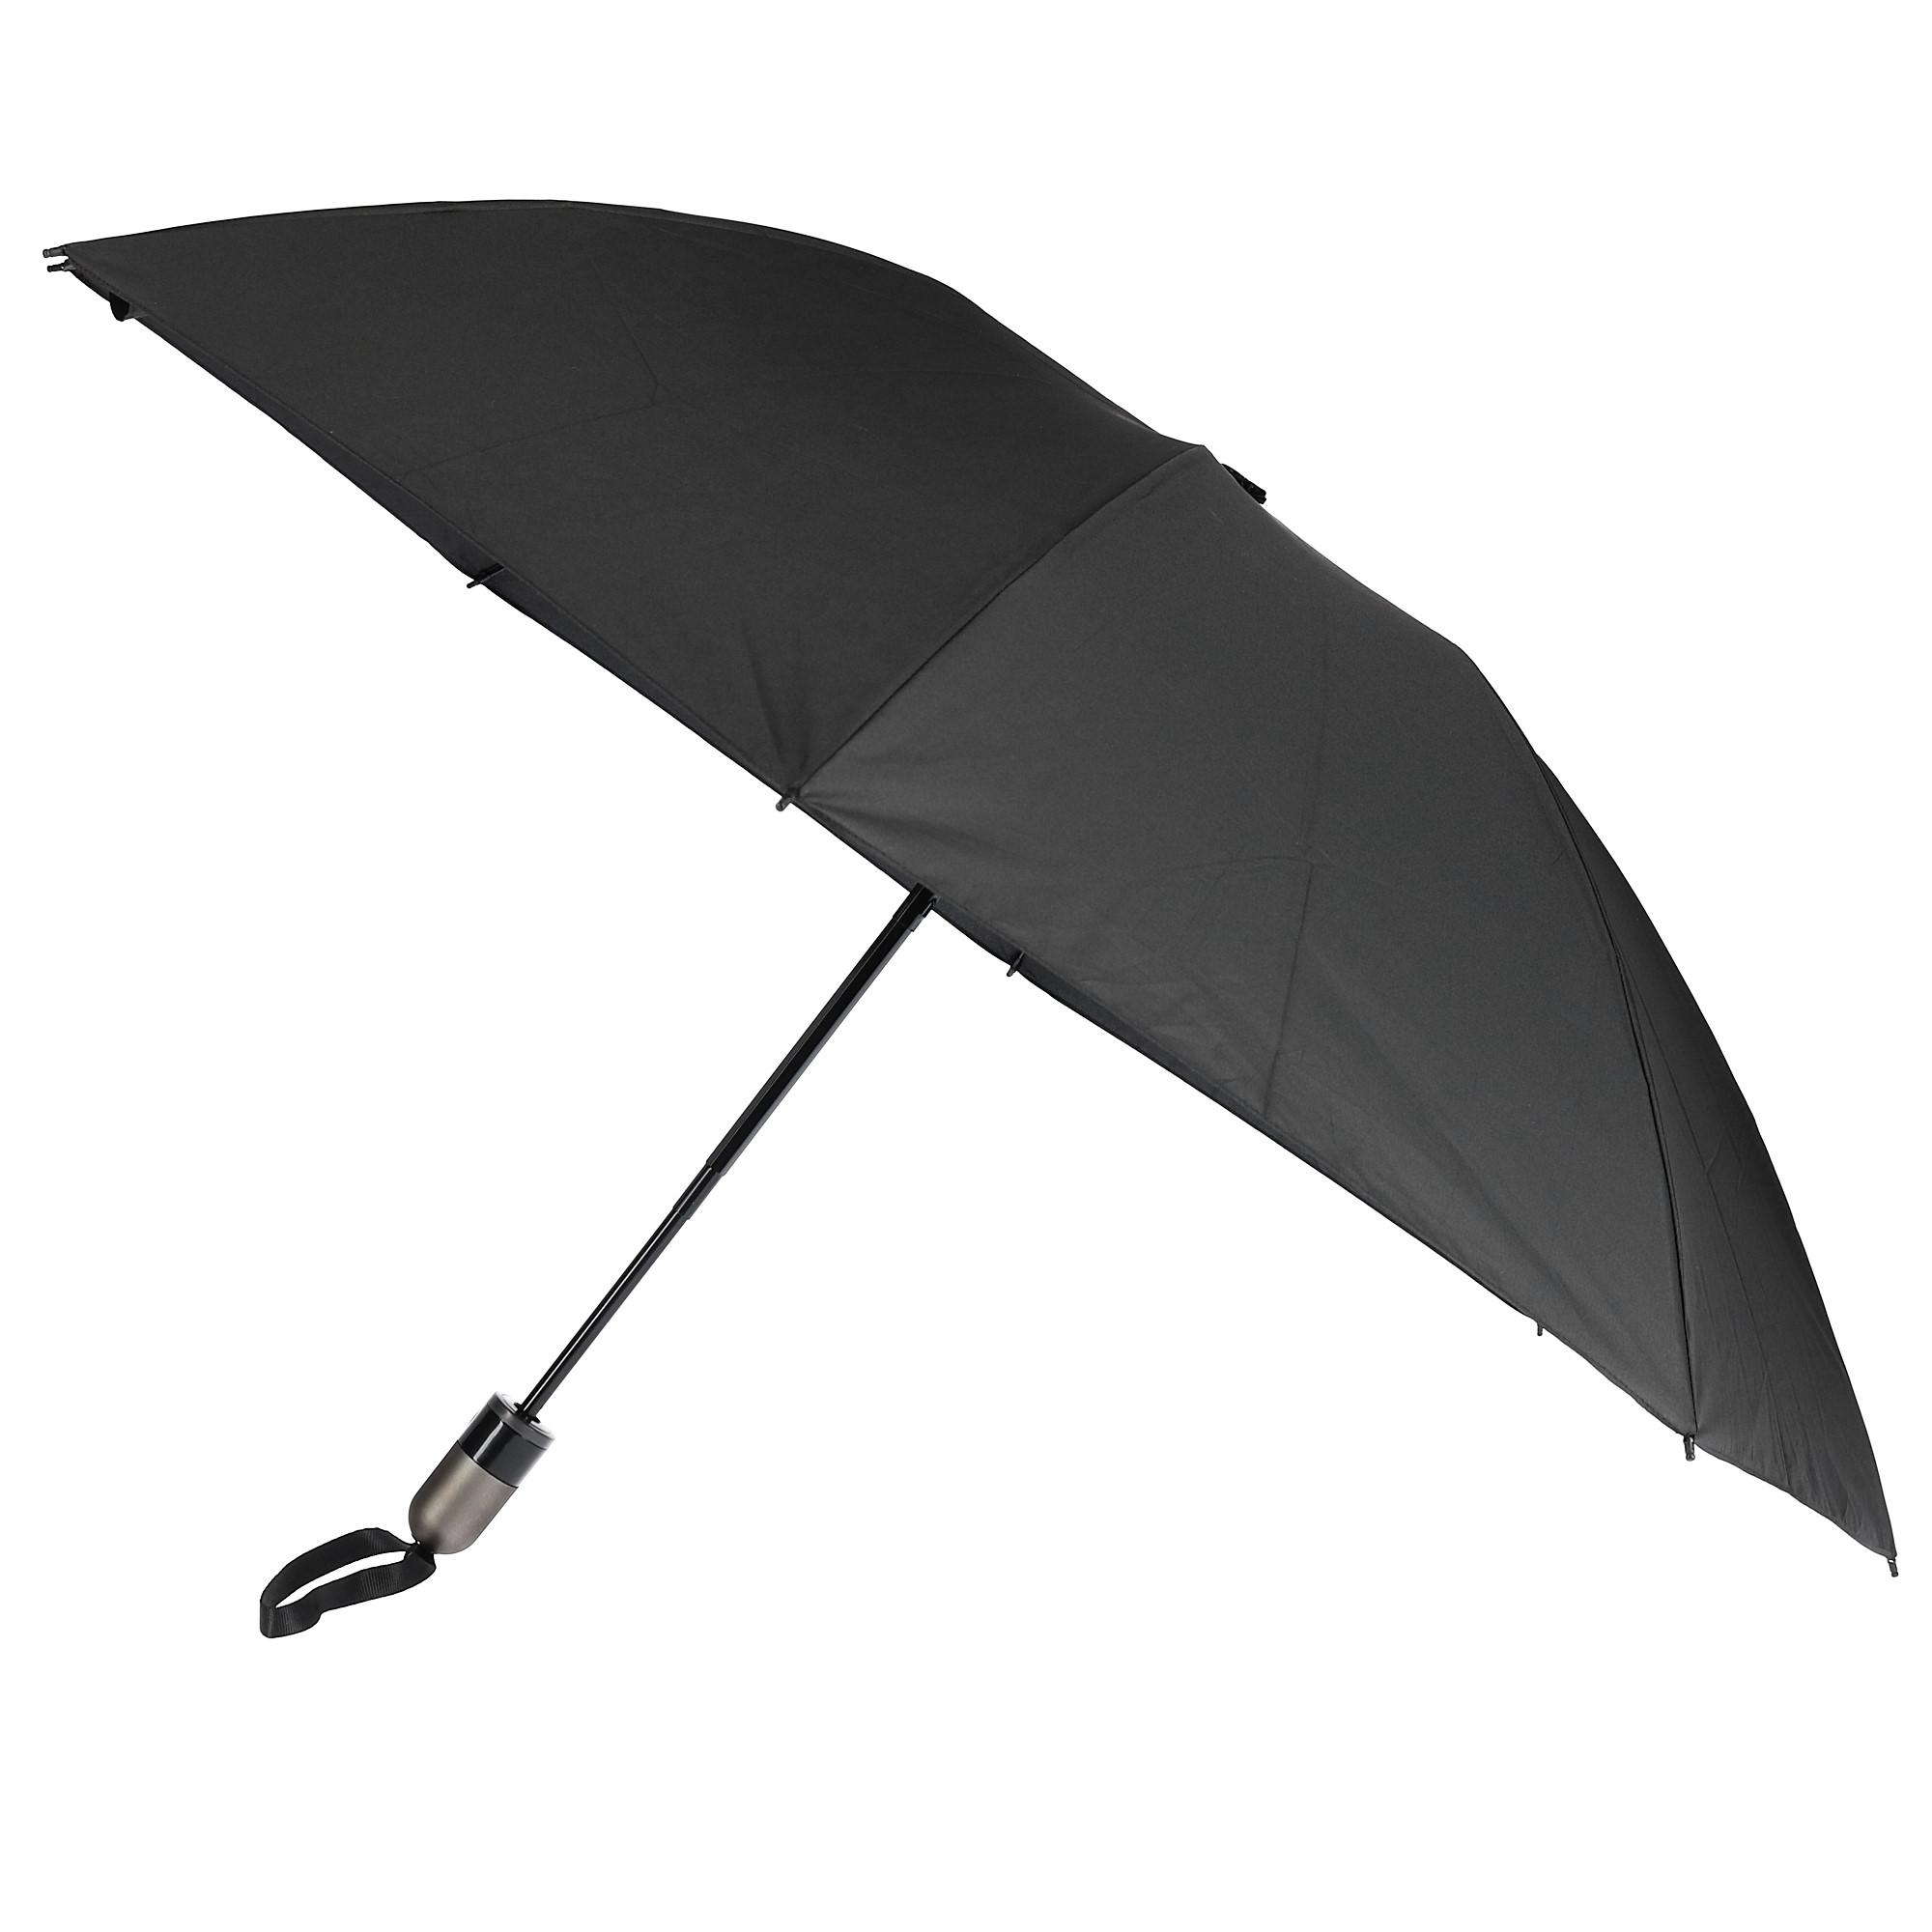 ShedRain Auto Open and Reverse Closing Compact UnbelievaBrella Umbrella